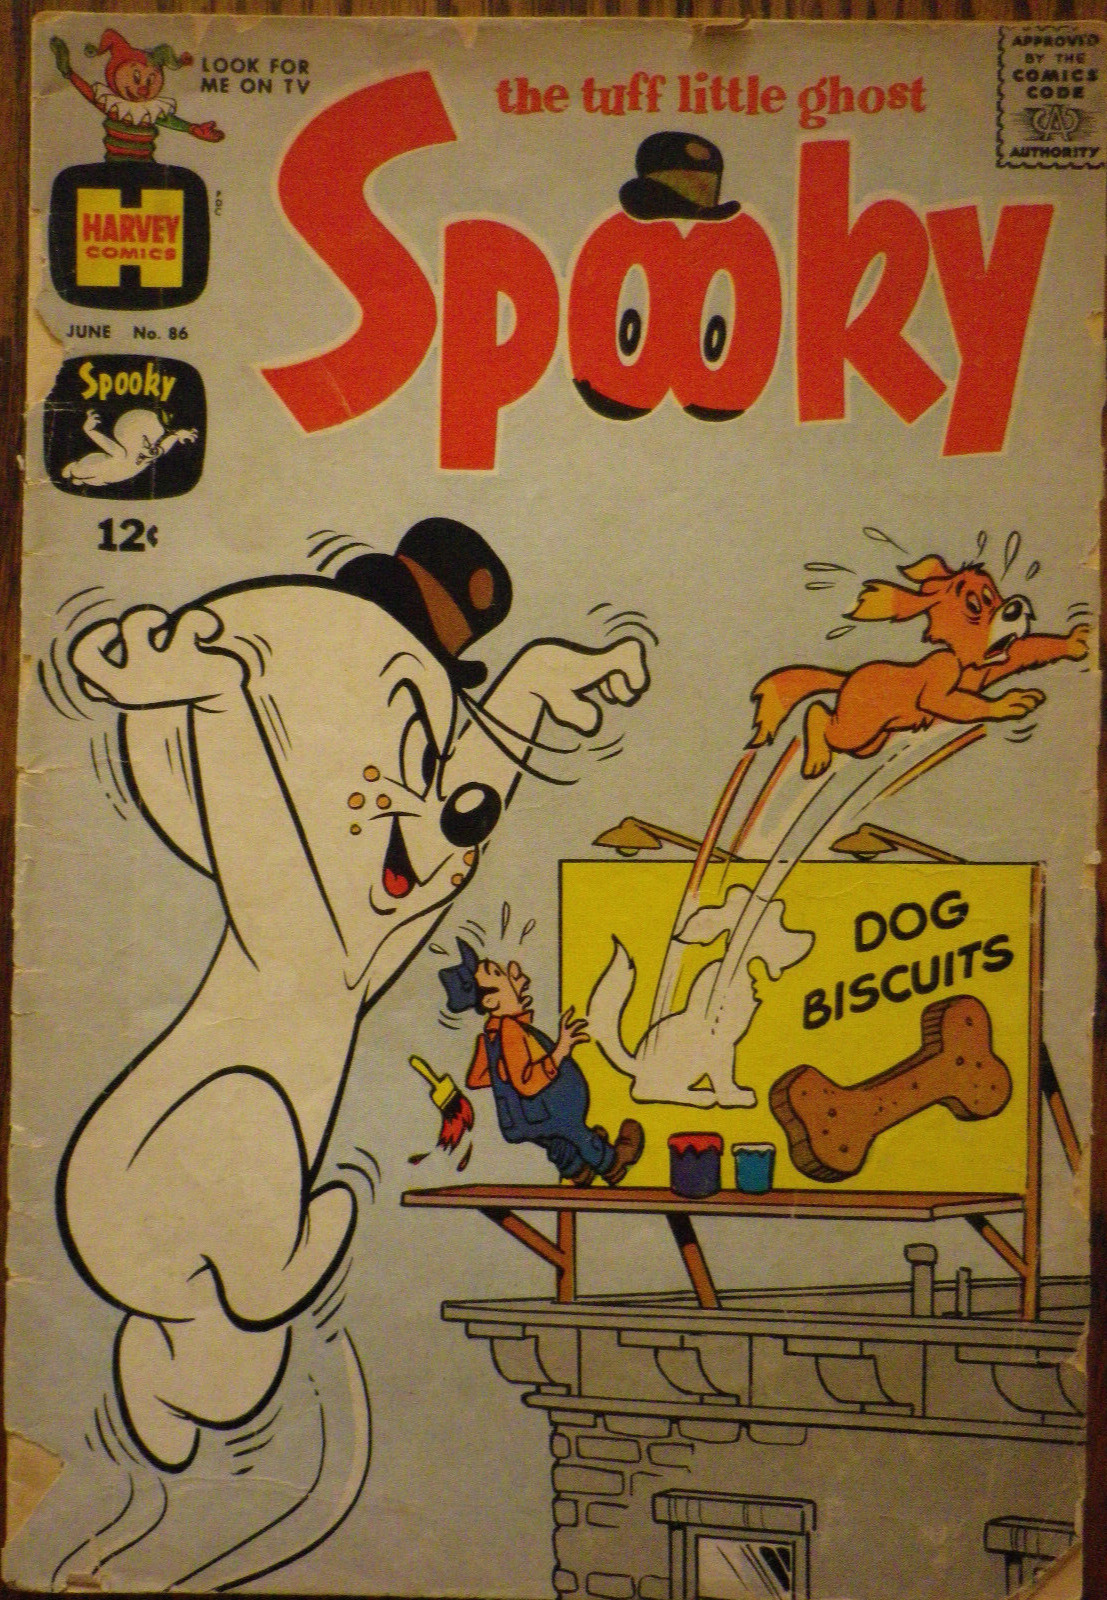 Spooky #86 - June 1965 - Harvey Comics - VERY NICE Look